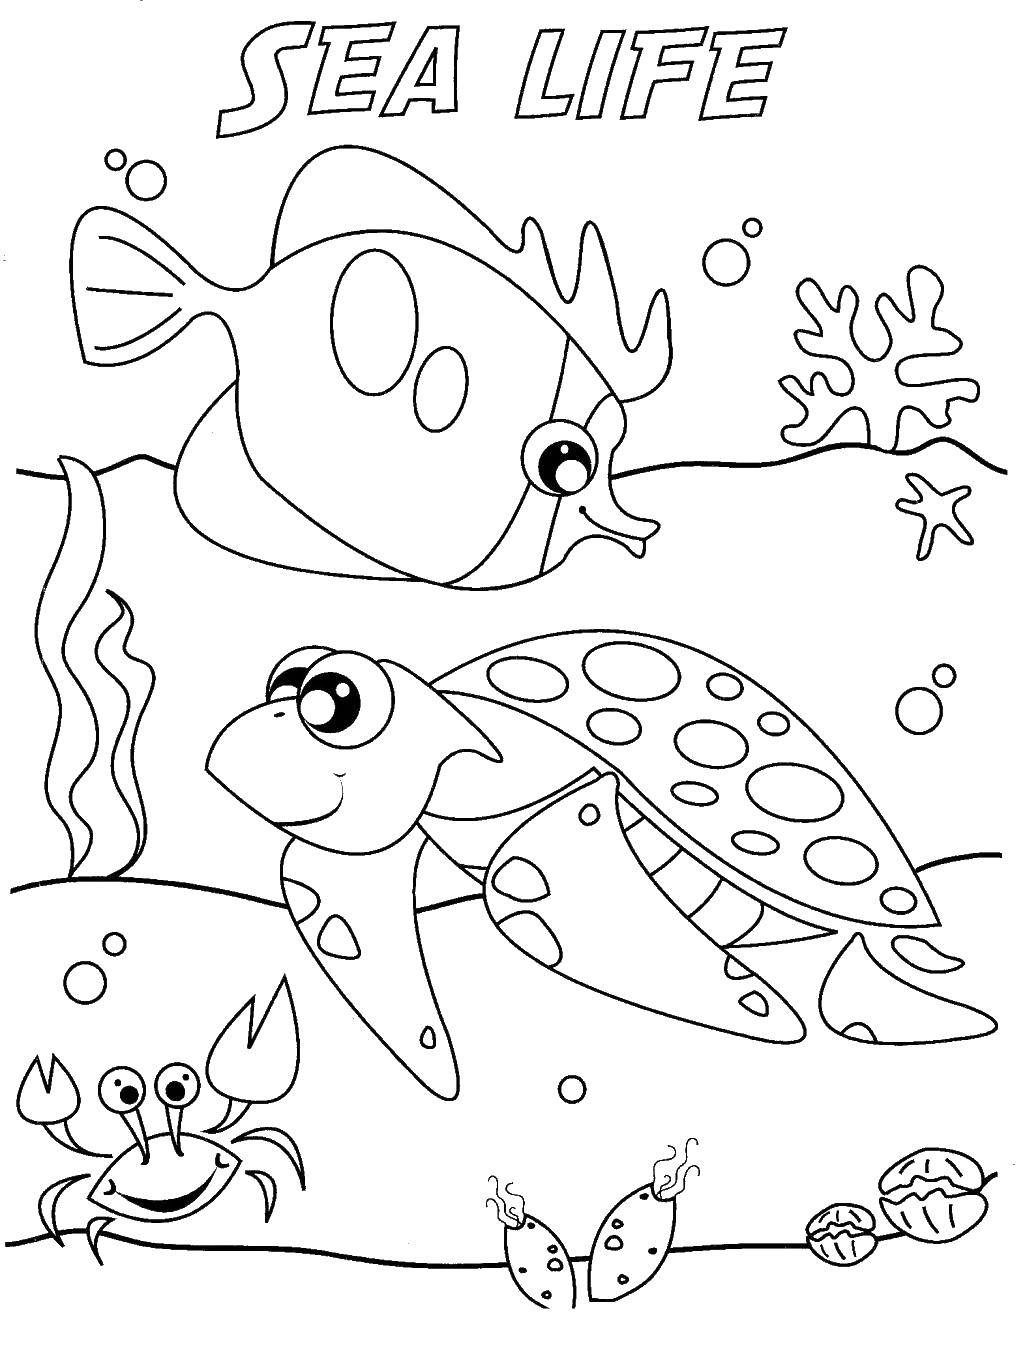 Coloring Marine life. Category Marine animals. Tags:  Underwater world.